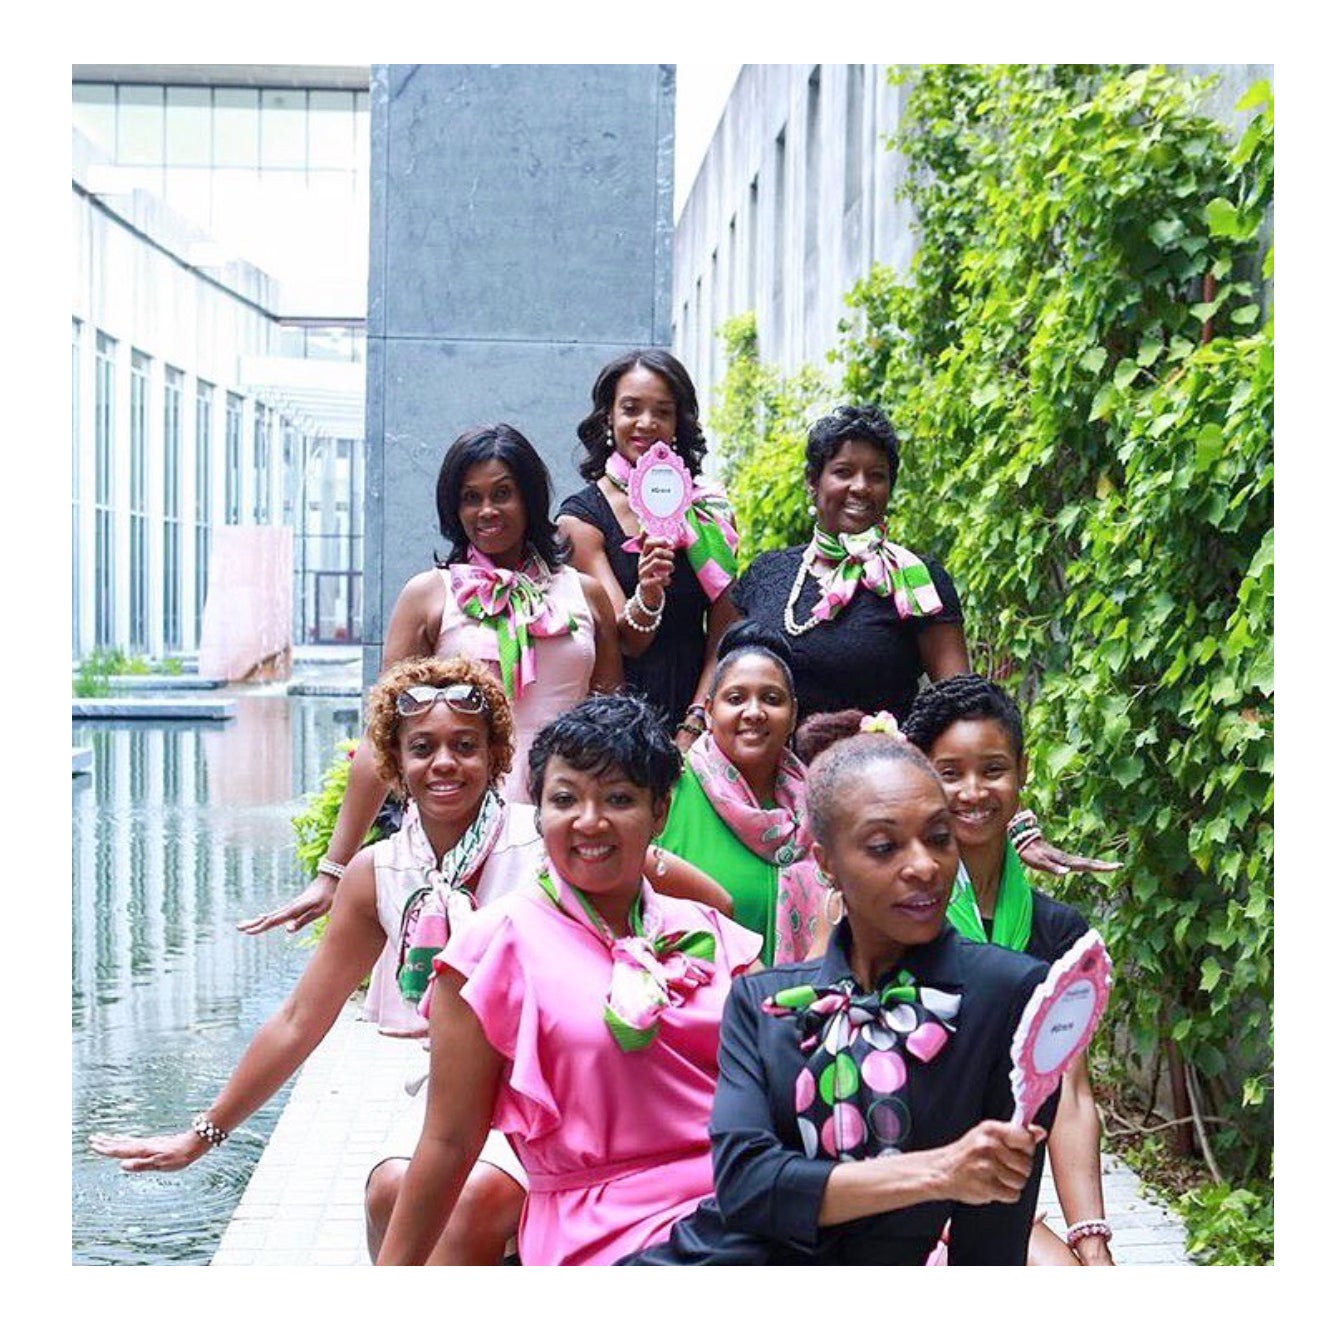 The Ladies of Alpha Kappa Alpha Sorority, Inc. Paint Atlanta Pink and Green
